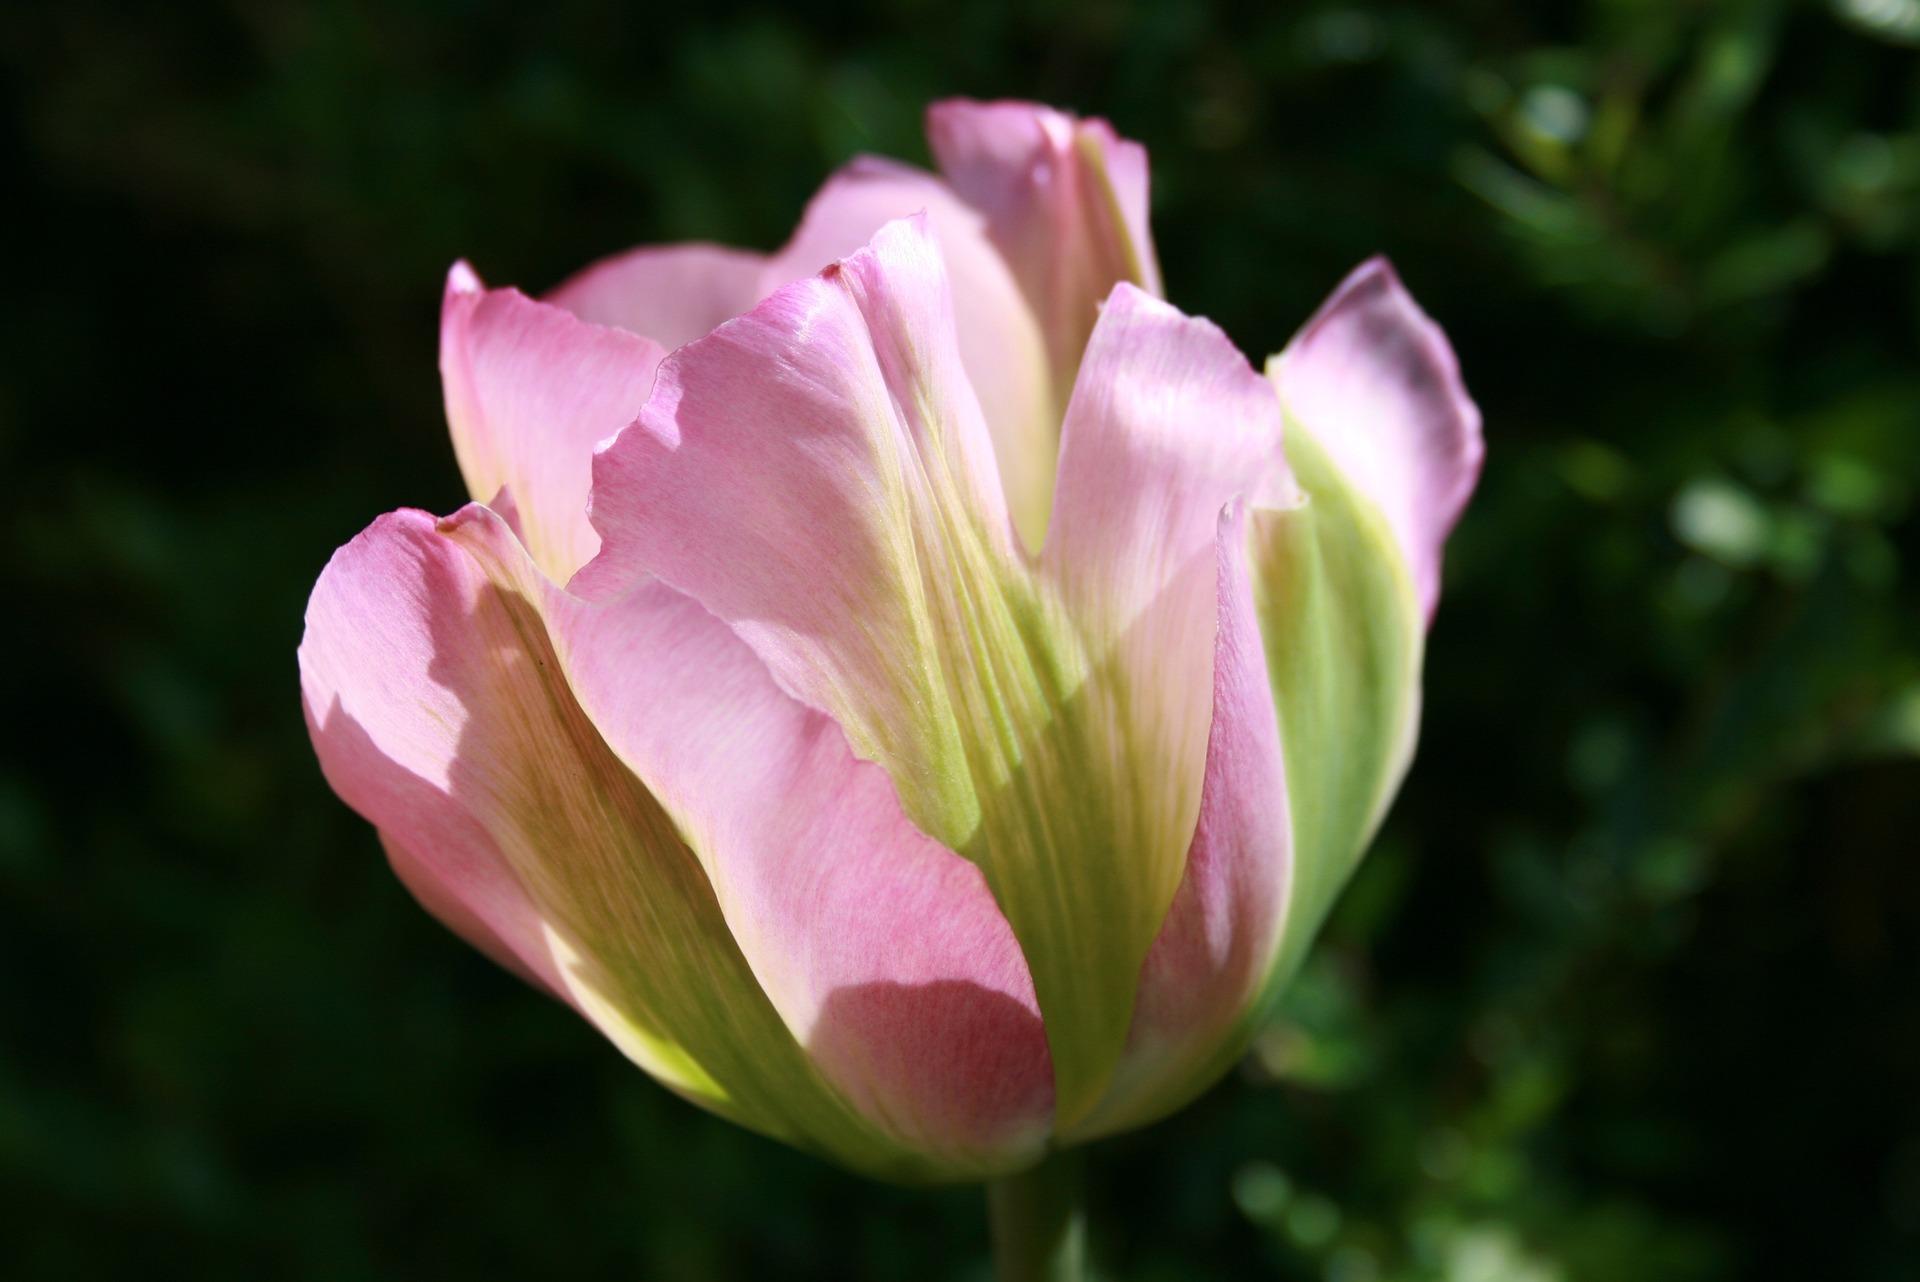 Tulip Viridiflora 'Groenland' - Tulip from Leo Berbee Bulb Company